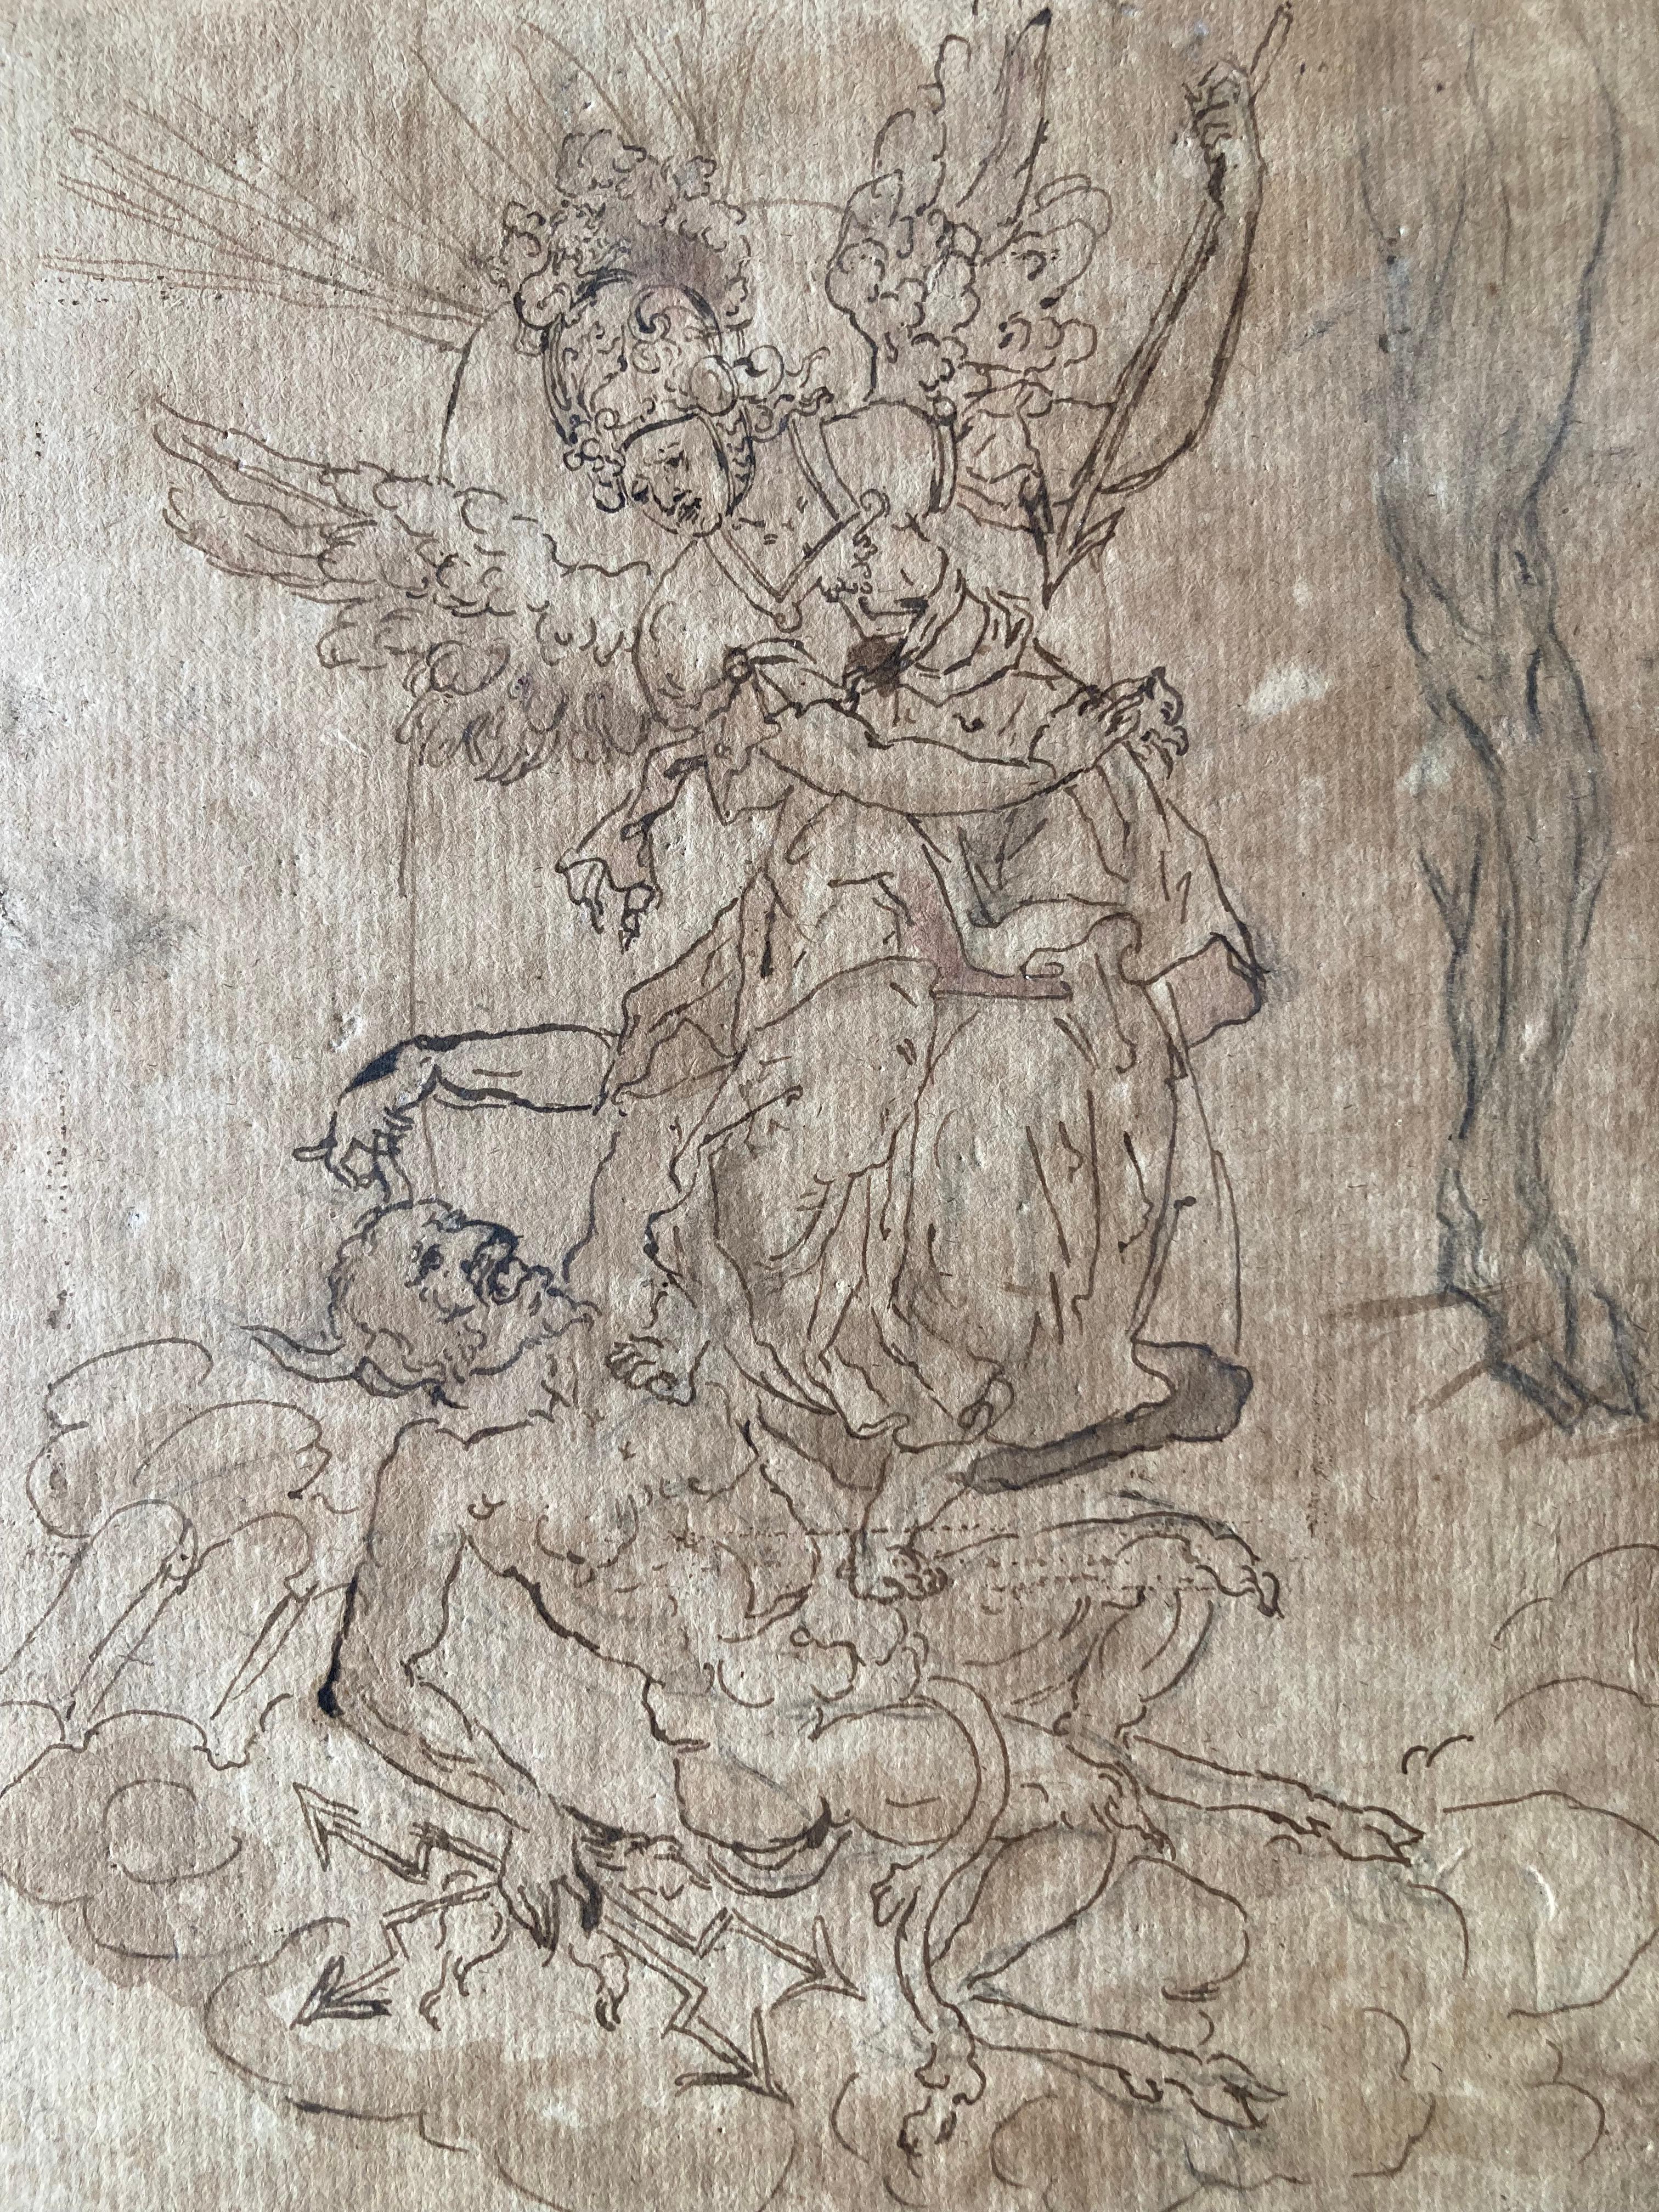 Southern German School, Circle of Sustris or Gundelach,
Archangel Michael defending the devil
Impressive Drawing on Paper (on the back glued behind)
Passepartout 52.6 x 38 cm